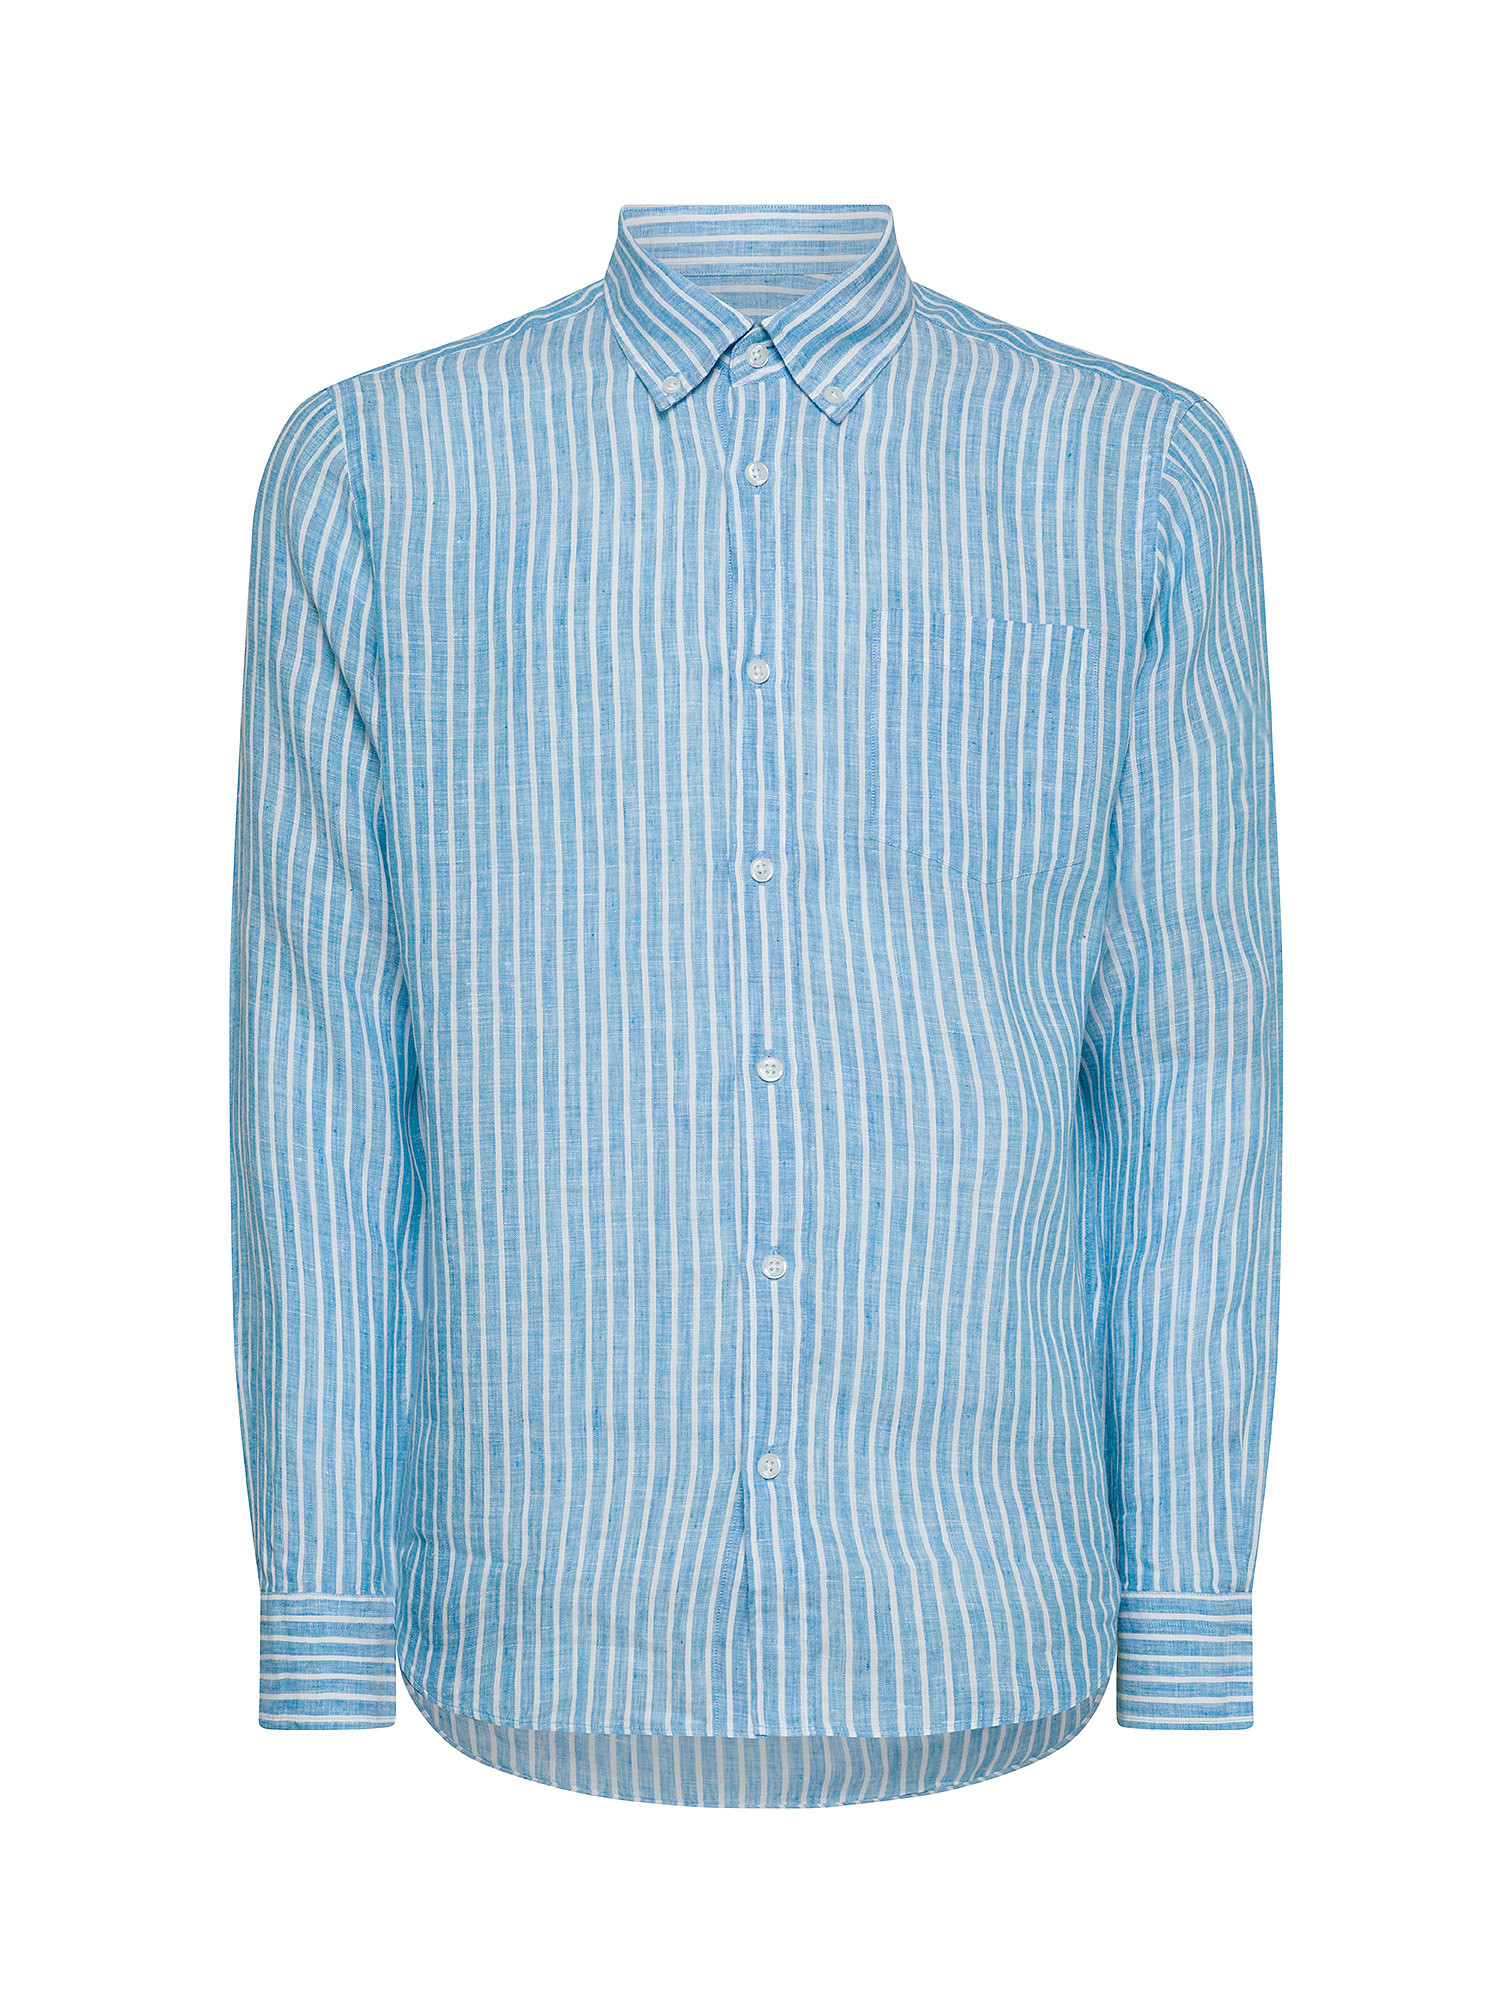 Luca D'Altieri - Camicia tailor fit in puro lino, Azzurro turchese, large image number 0